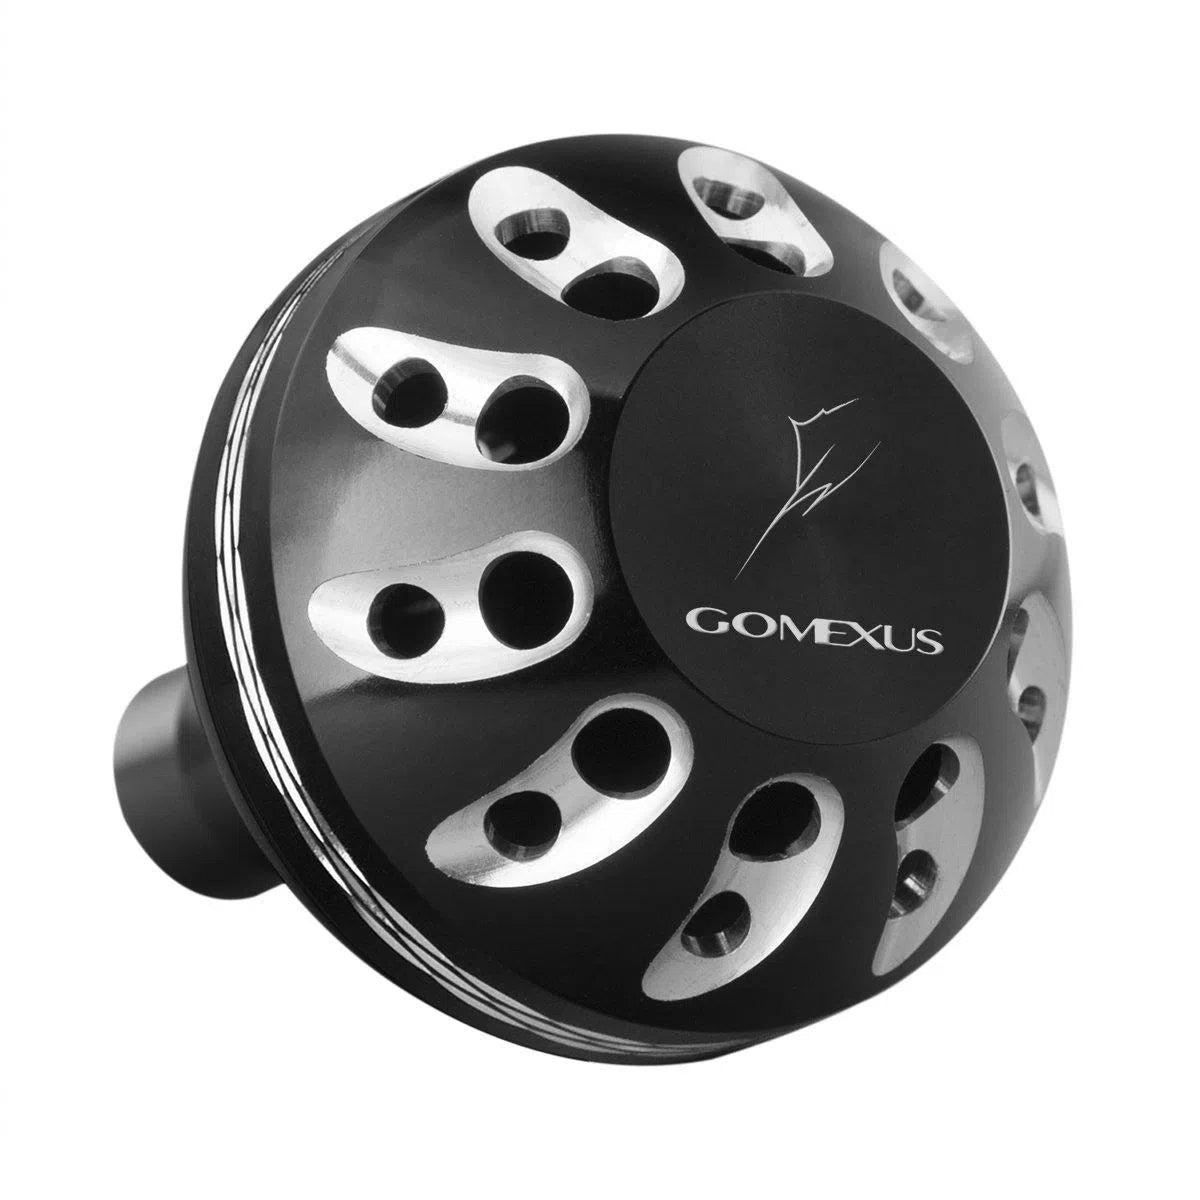 Gomexus CNC Small Spin Reel Power Knob-Reels - Spares & Custom Parts-Gomexus-Black & Silver-47mm-Fishing Station